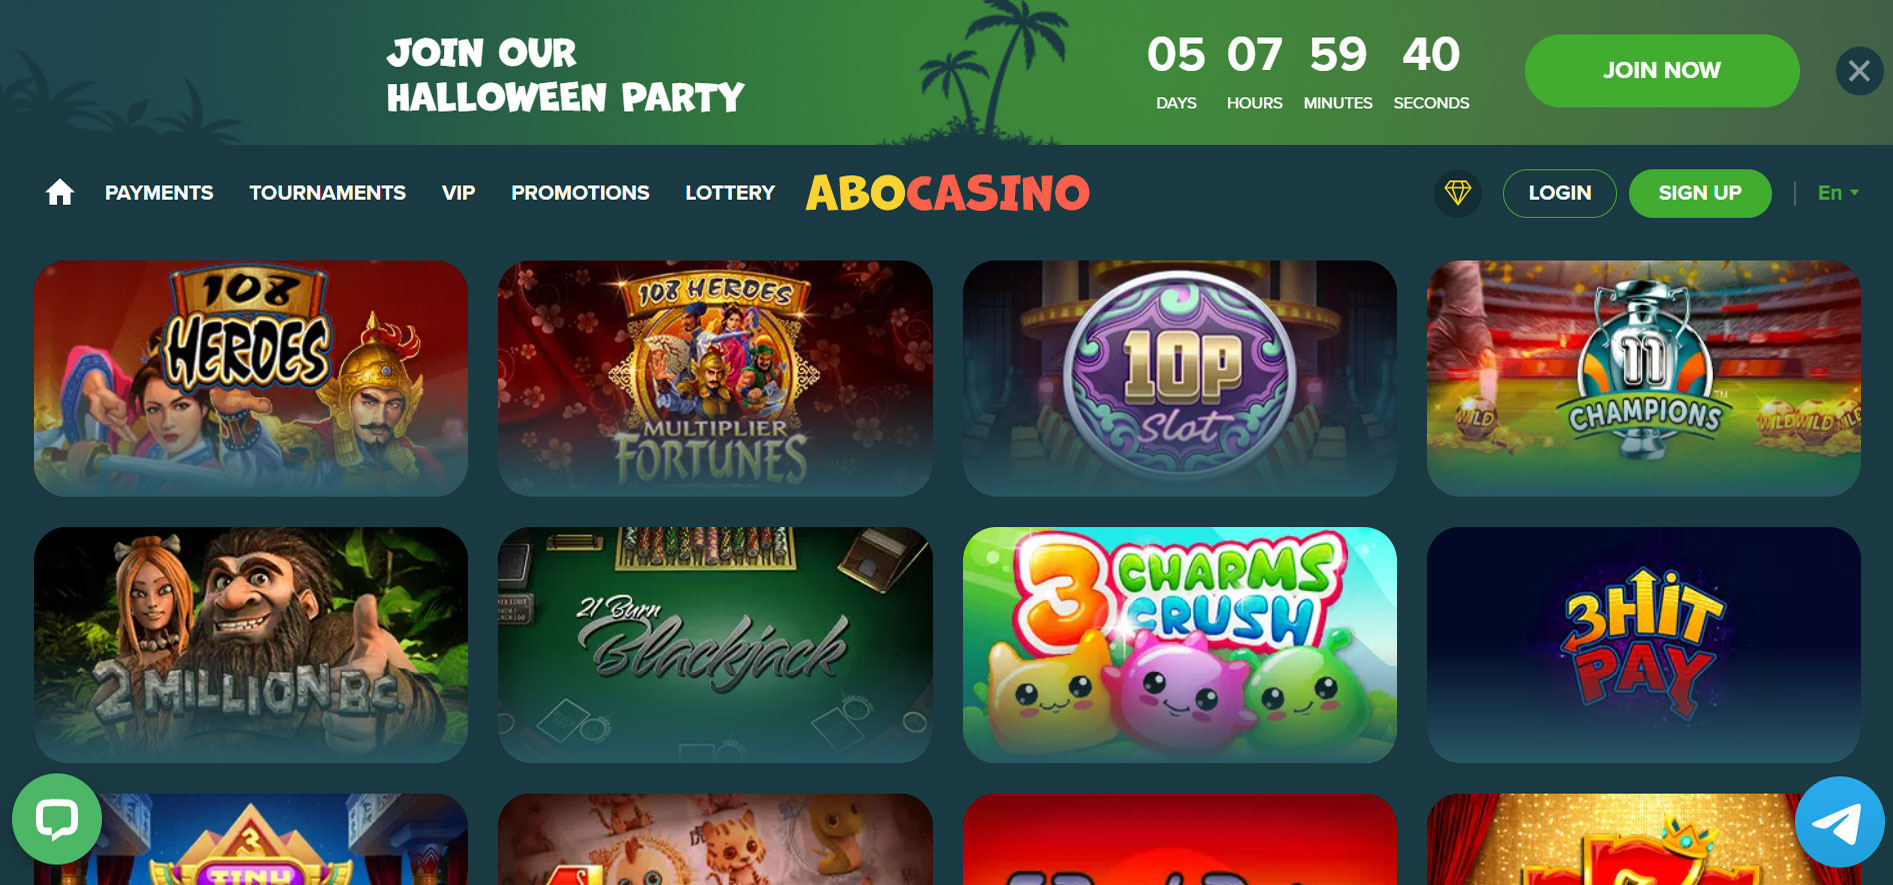 Abo Casino Slots